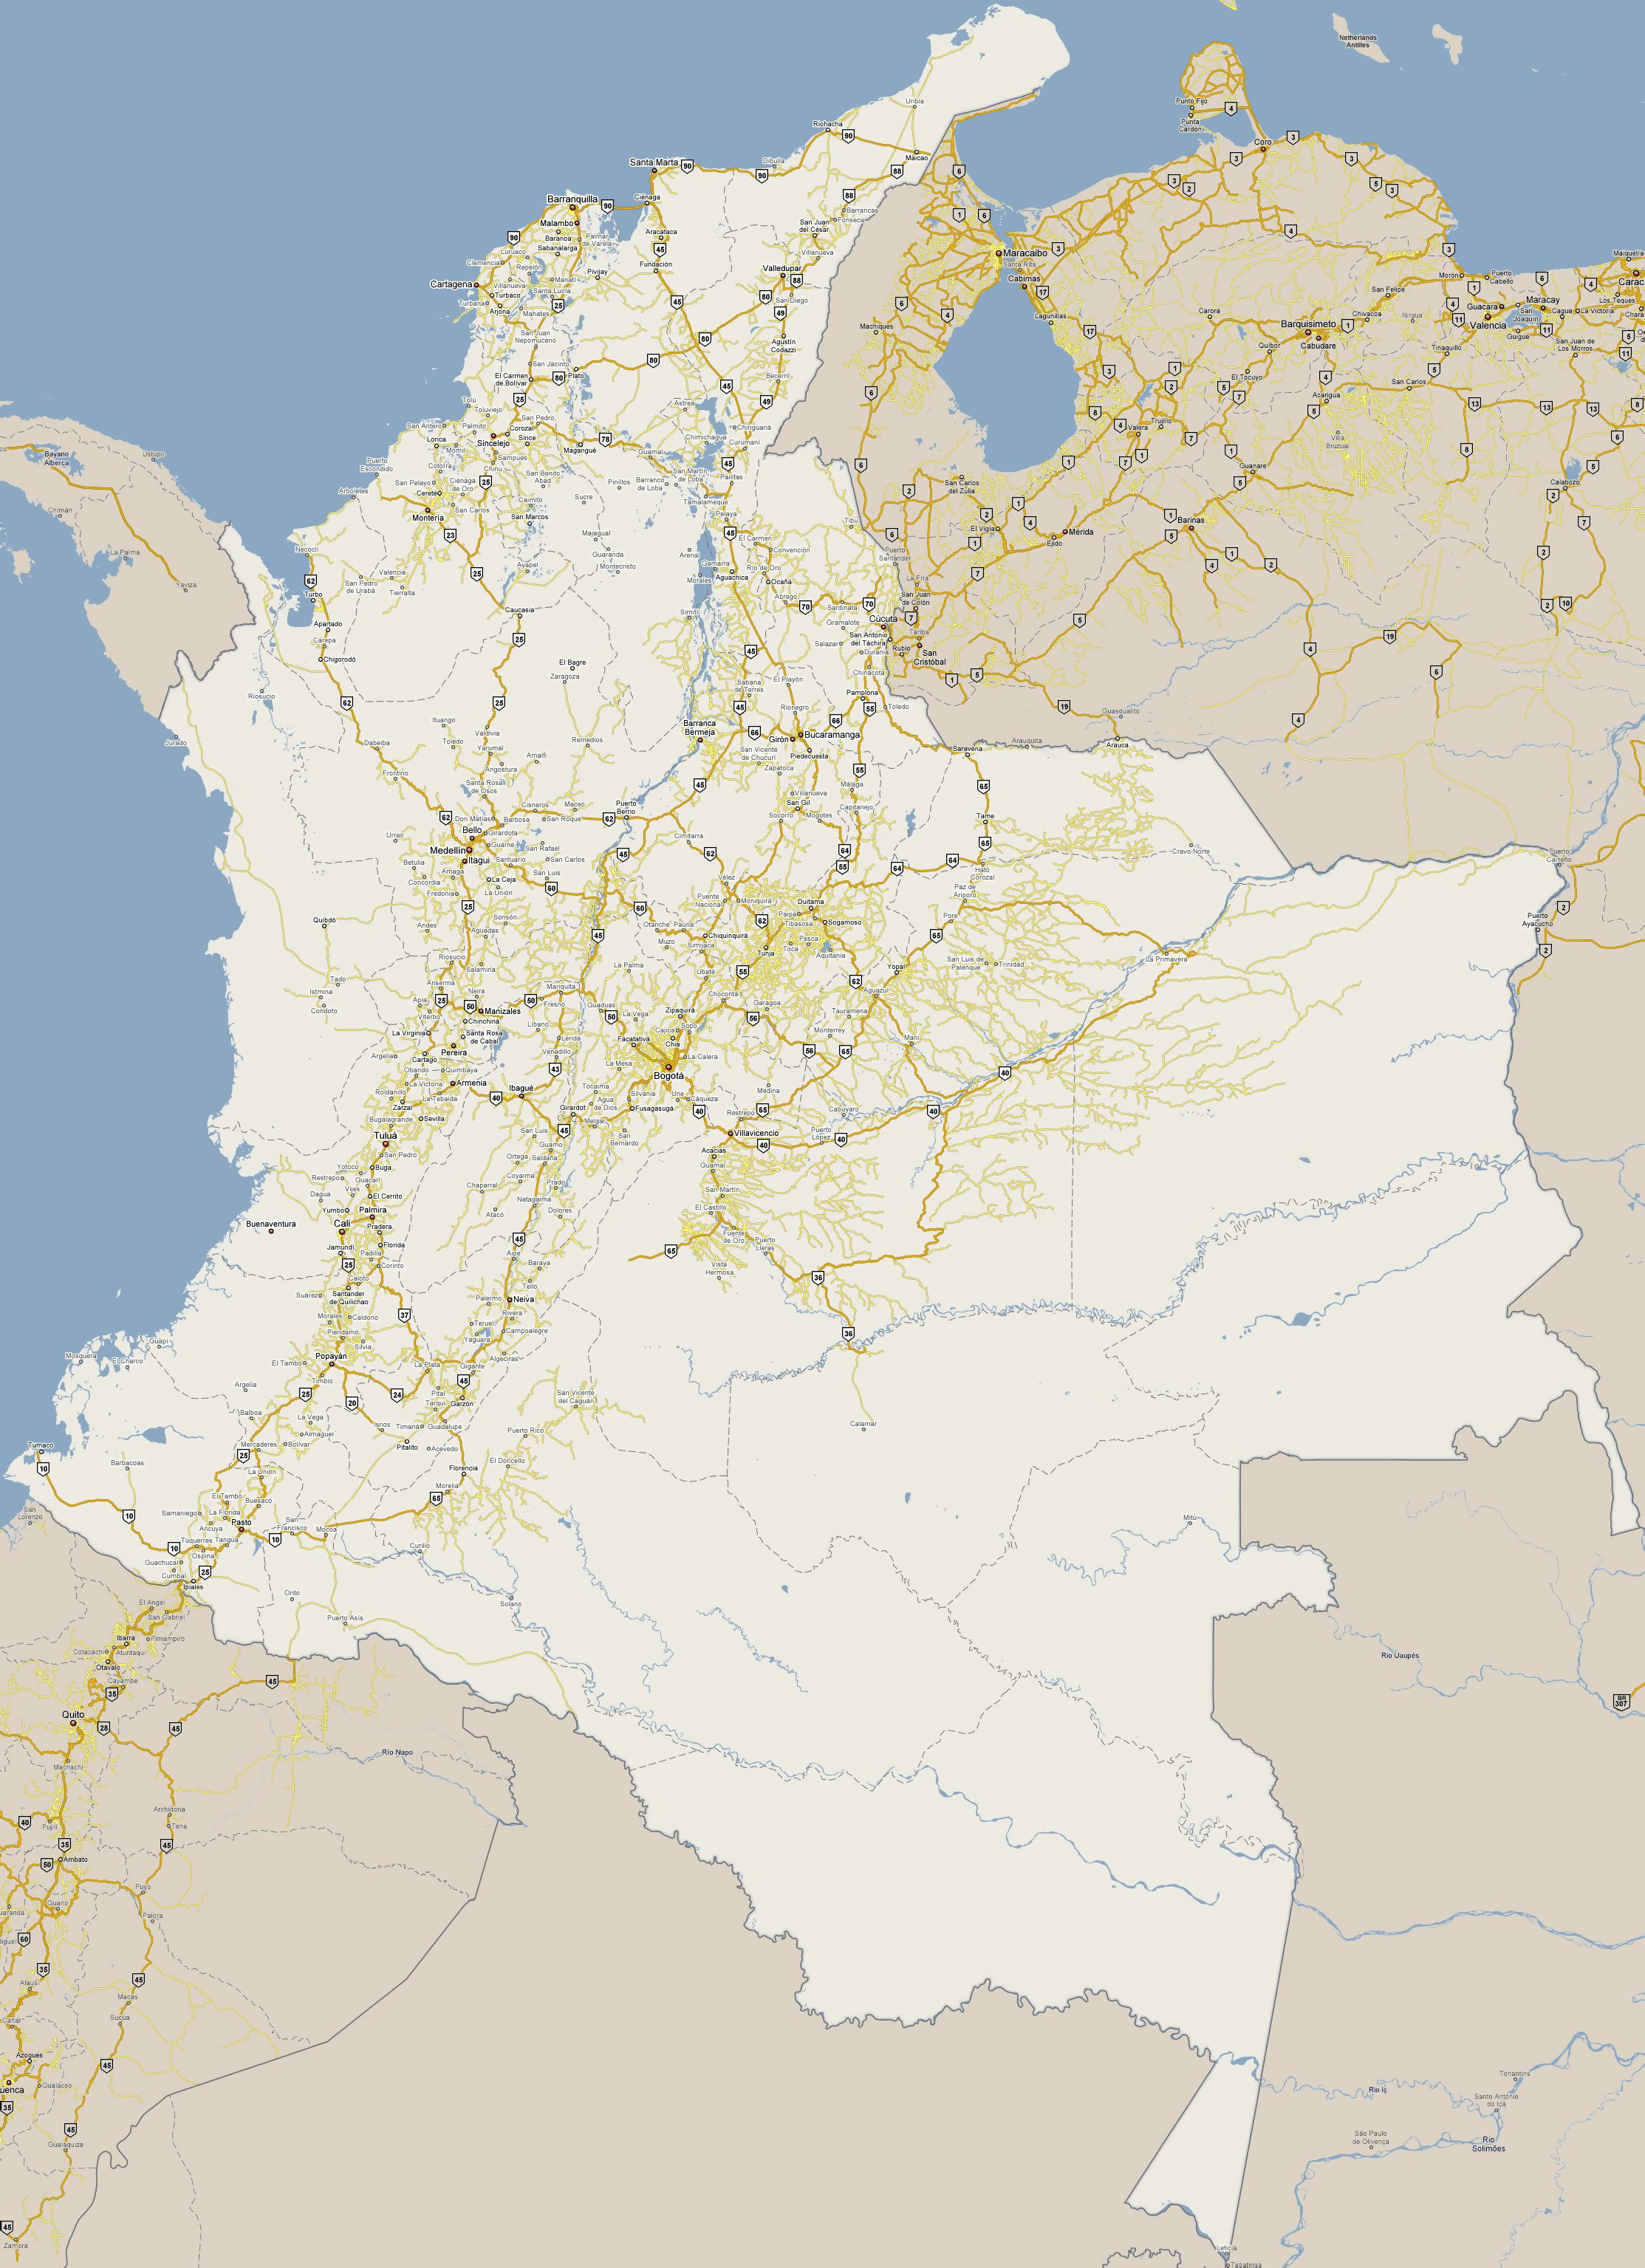 Mapas De Colombia Mapa De La Red Vial De Colombia Images And Photos